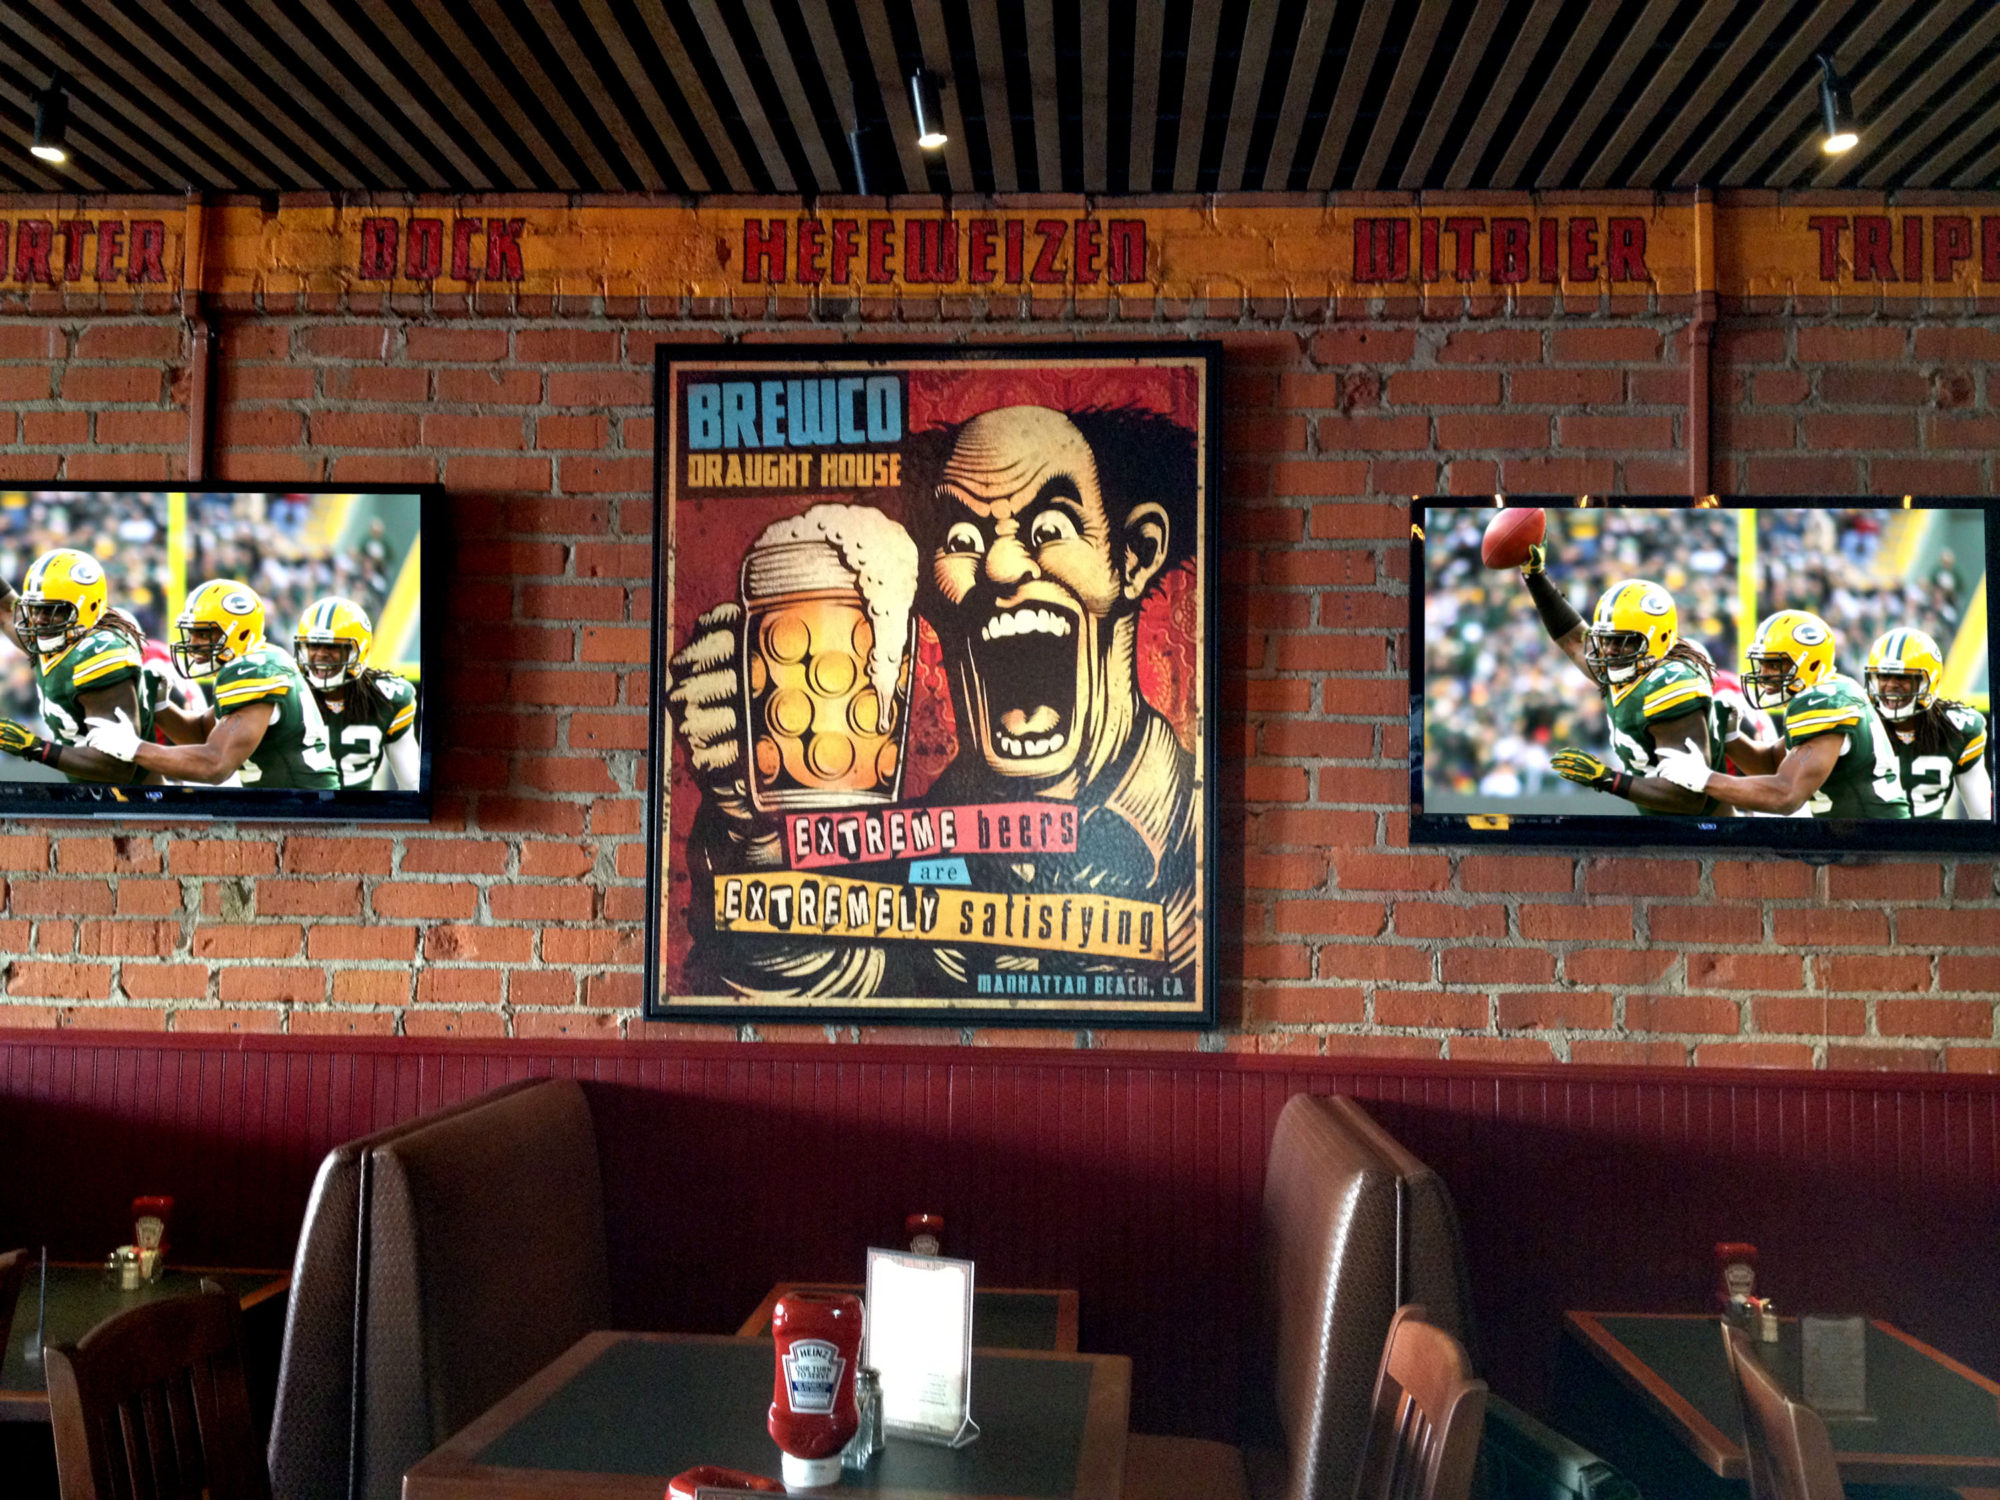 Brewco Extreme Beers poster on display at Brewco Manhattan Beach.